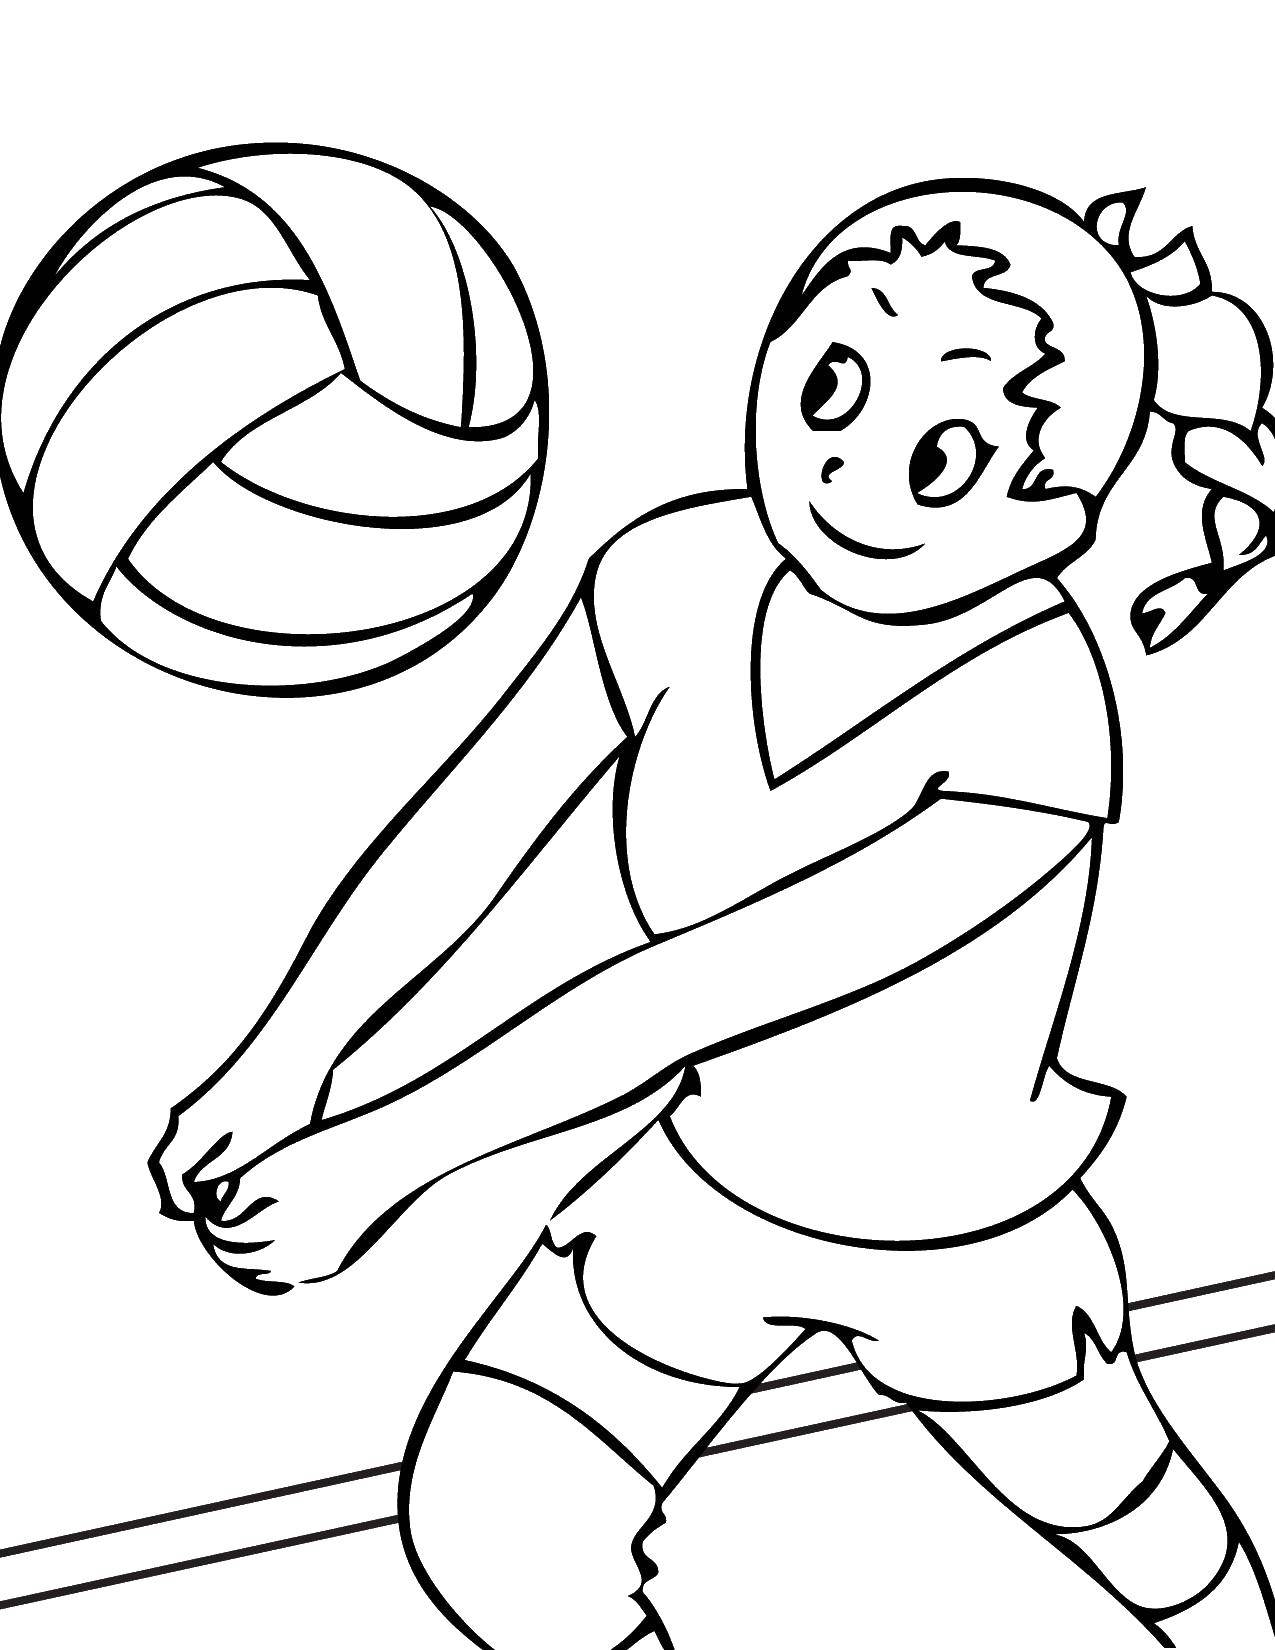 Название: Раскраска Девочка волейболистка. Категория: Спорт. Теги: девочка, мяч, волейбол.